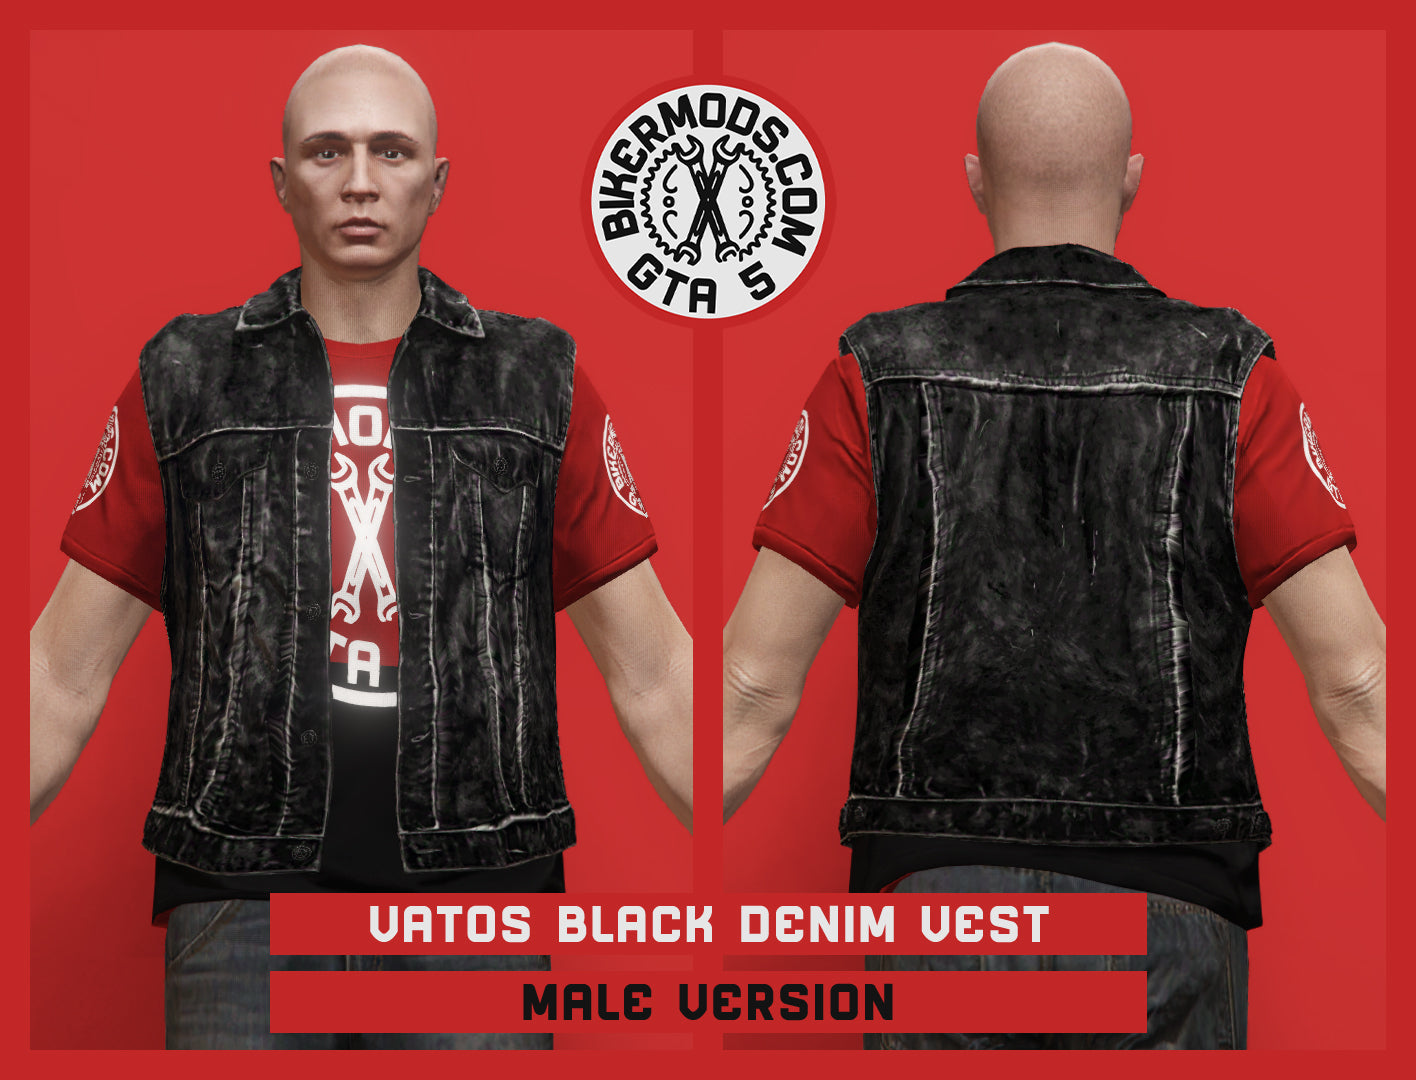 Vatos Black Denim Vest (Male)